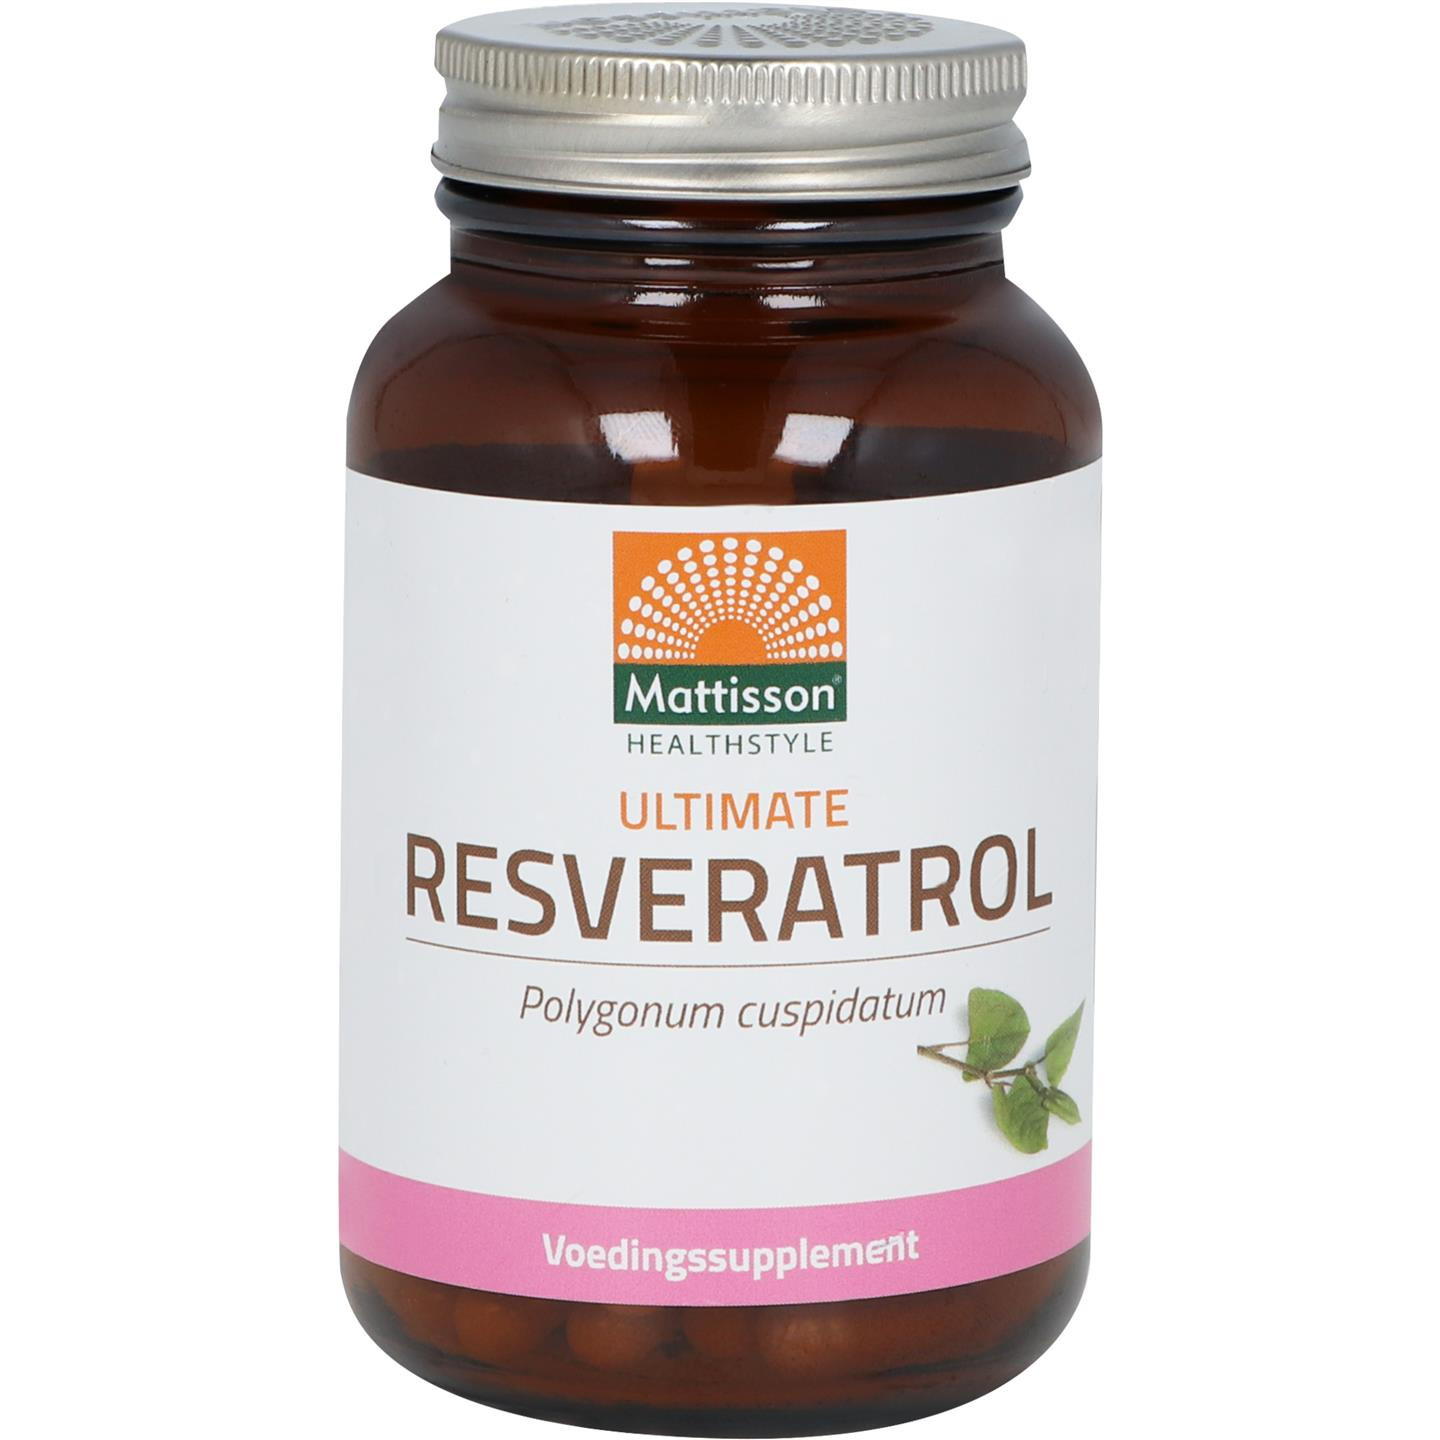 Ultimate Resveratrol